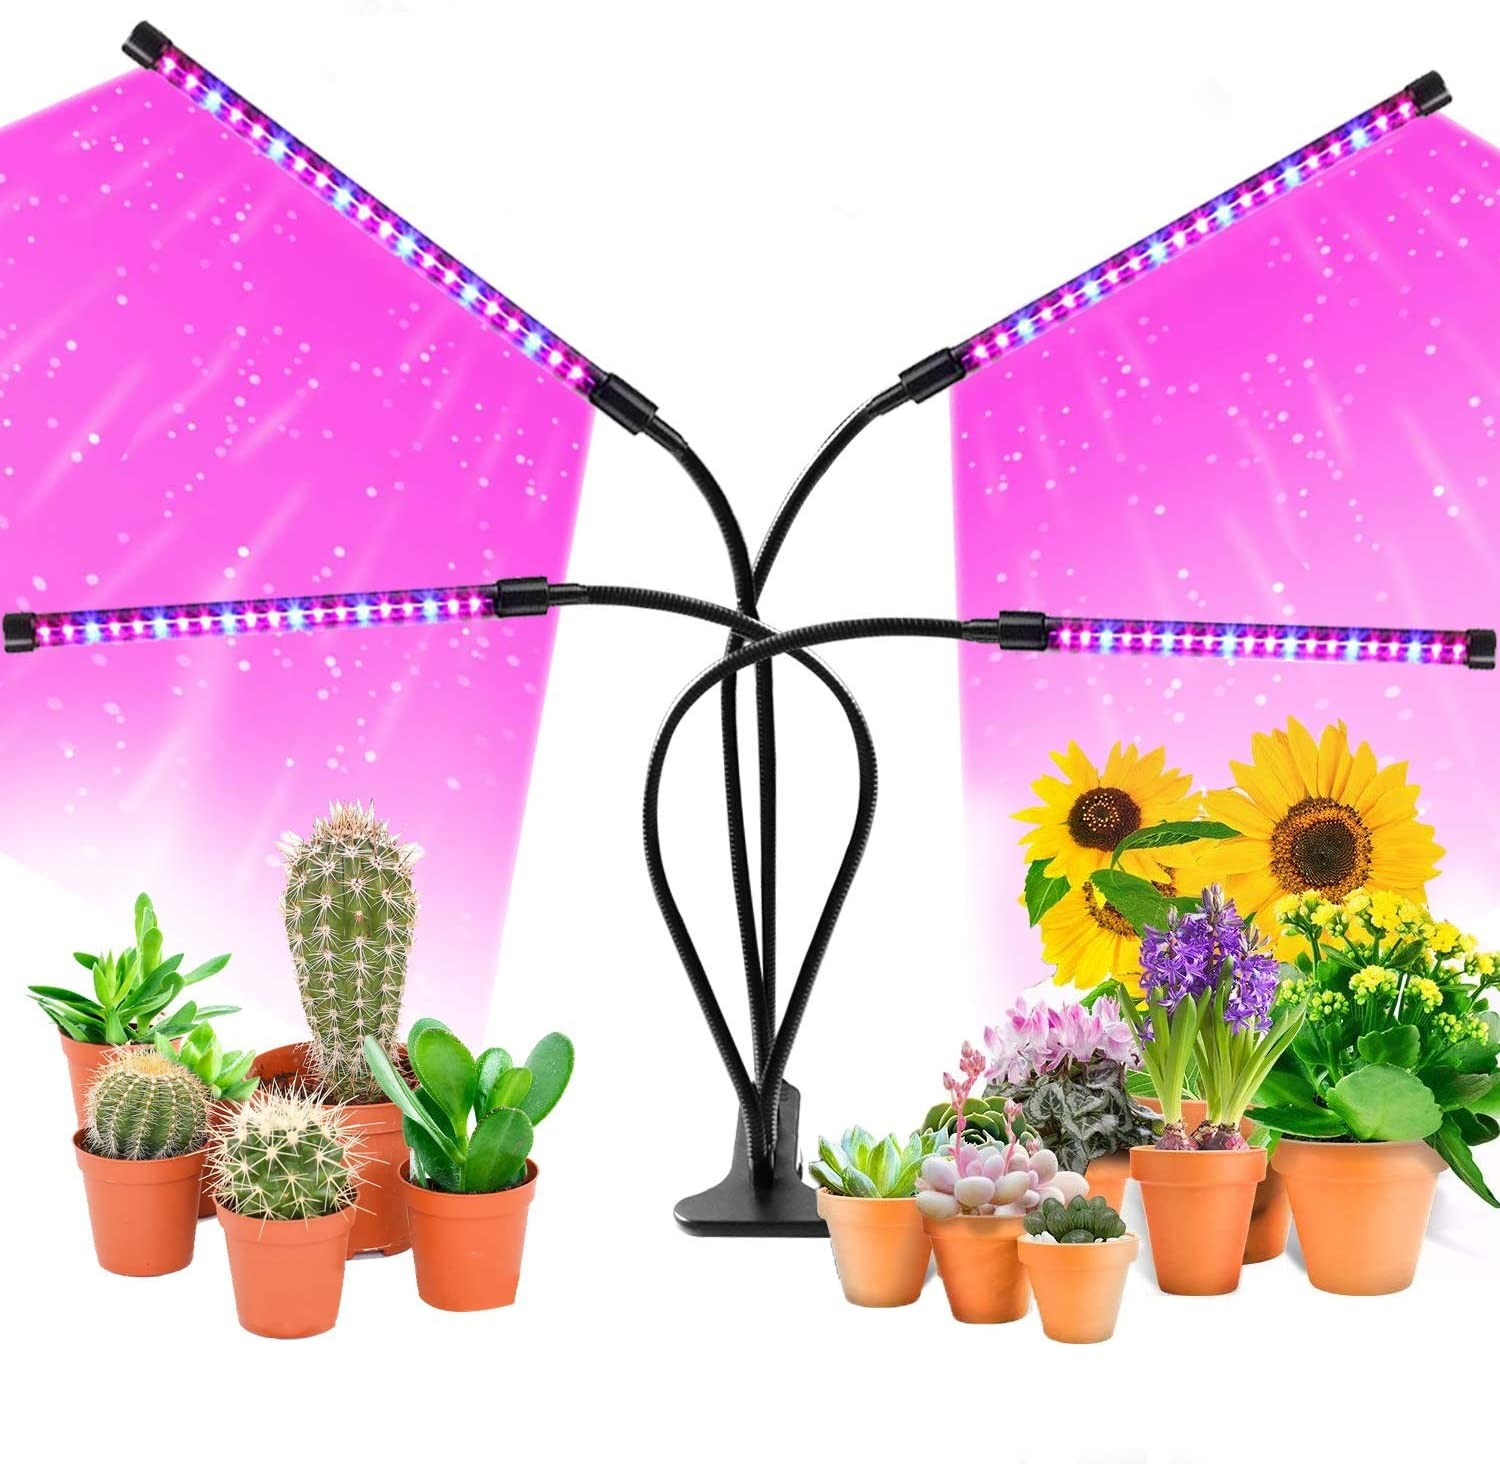 INF LED-Lampe für Pflanzen / Pflanzenbeleuchtung mit flexiblen Armen 4 LED-Lampe